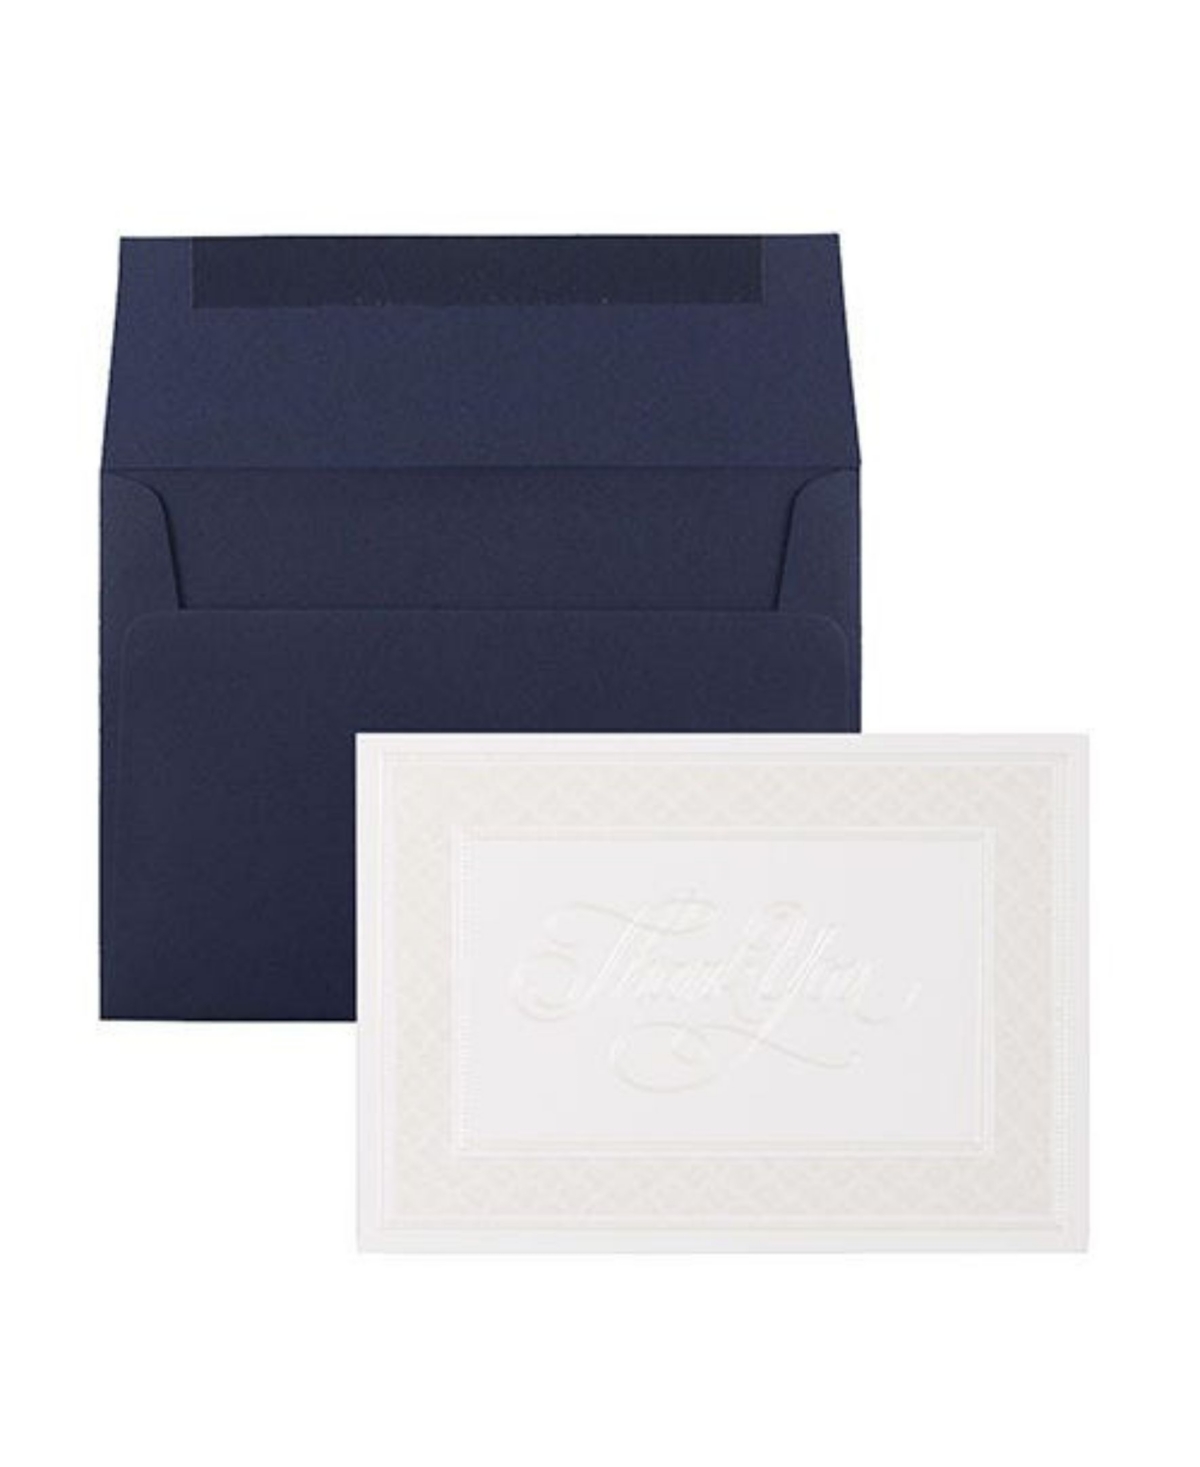 Jam Paper Thank You Card Sets In Border Cards Navy Envelopes